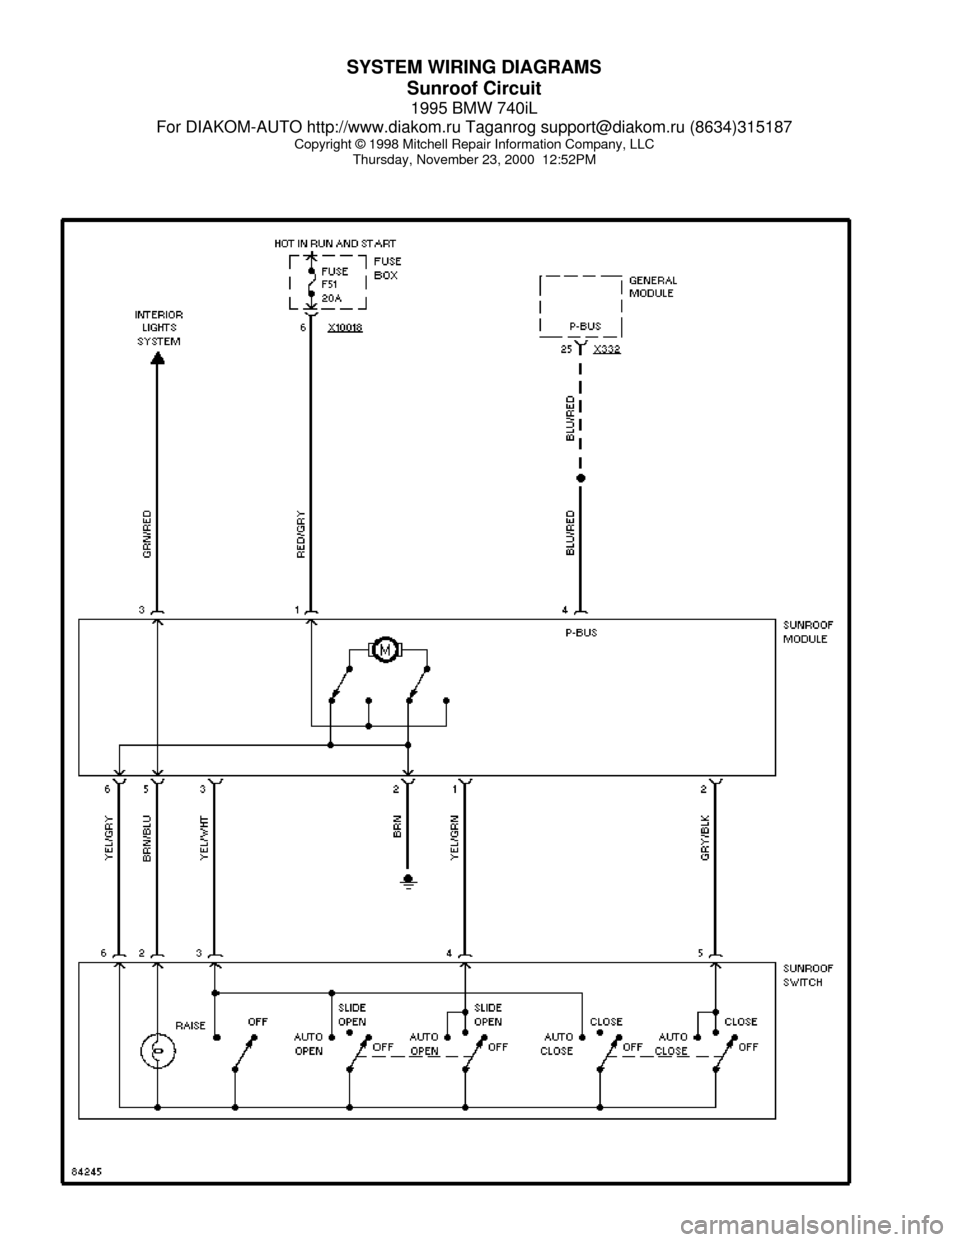 BMW 740il 1995 E38 System Wiring Diagrams SYSTEM WIRING DIAGRAMS
Sunroof Circuit
1995 BMW 740iL
For DIAKOM-AUTO http://www.diakom.ru Taganrog support@diakom.ru (8634)315187
Copyright © 1998 Mitchell Repair Information Company, LLC
Thursday, 